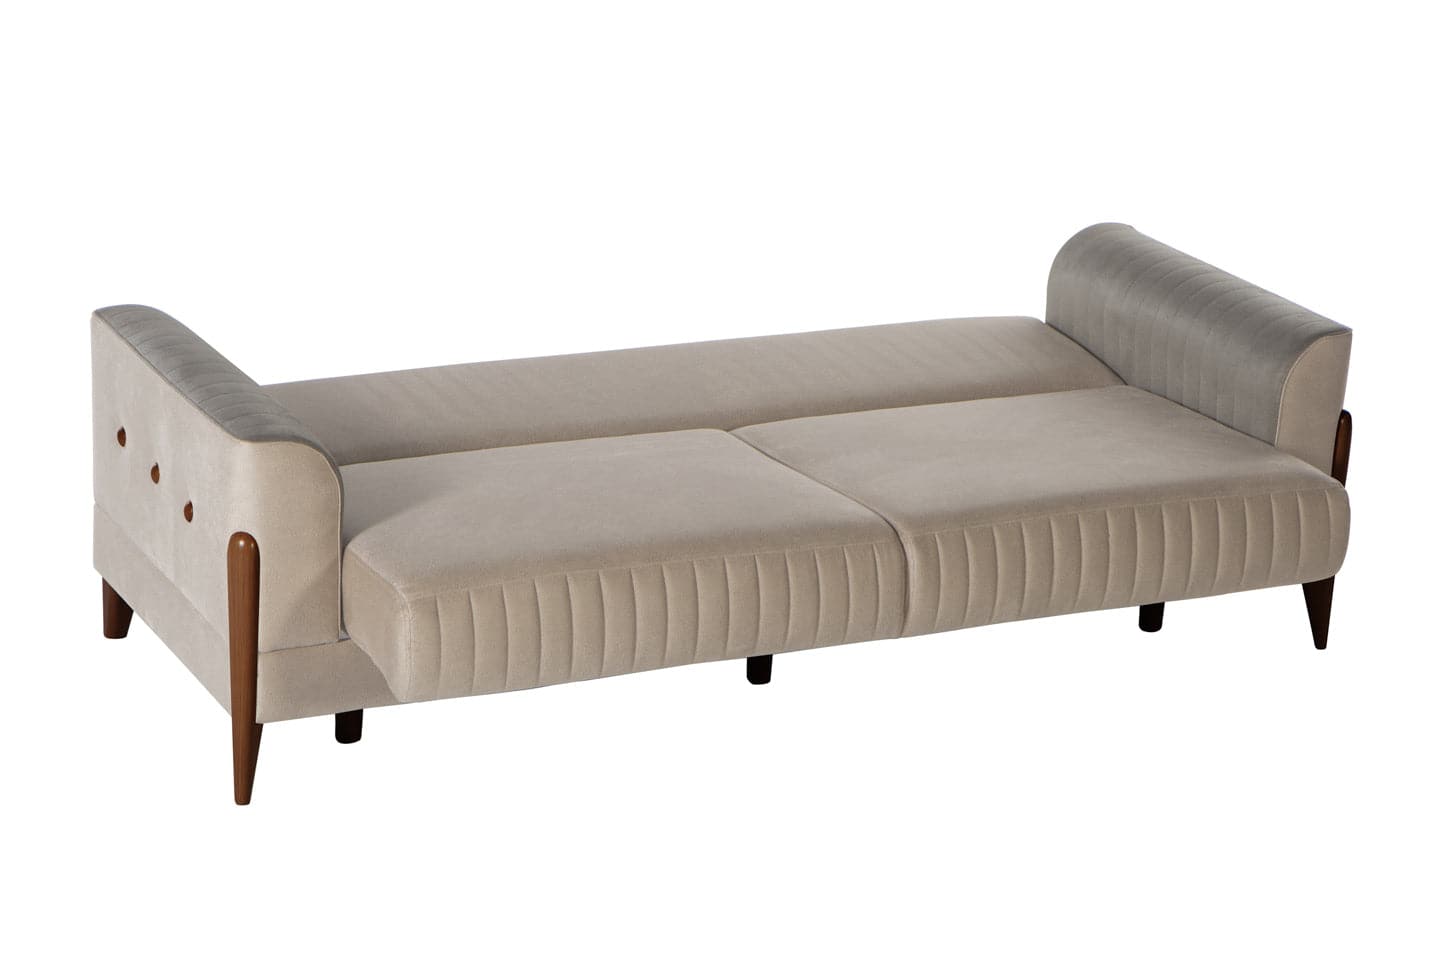 Piero 3 Seat Sleeper Sofa (Hande Beige) by Bellona